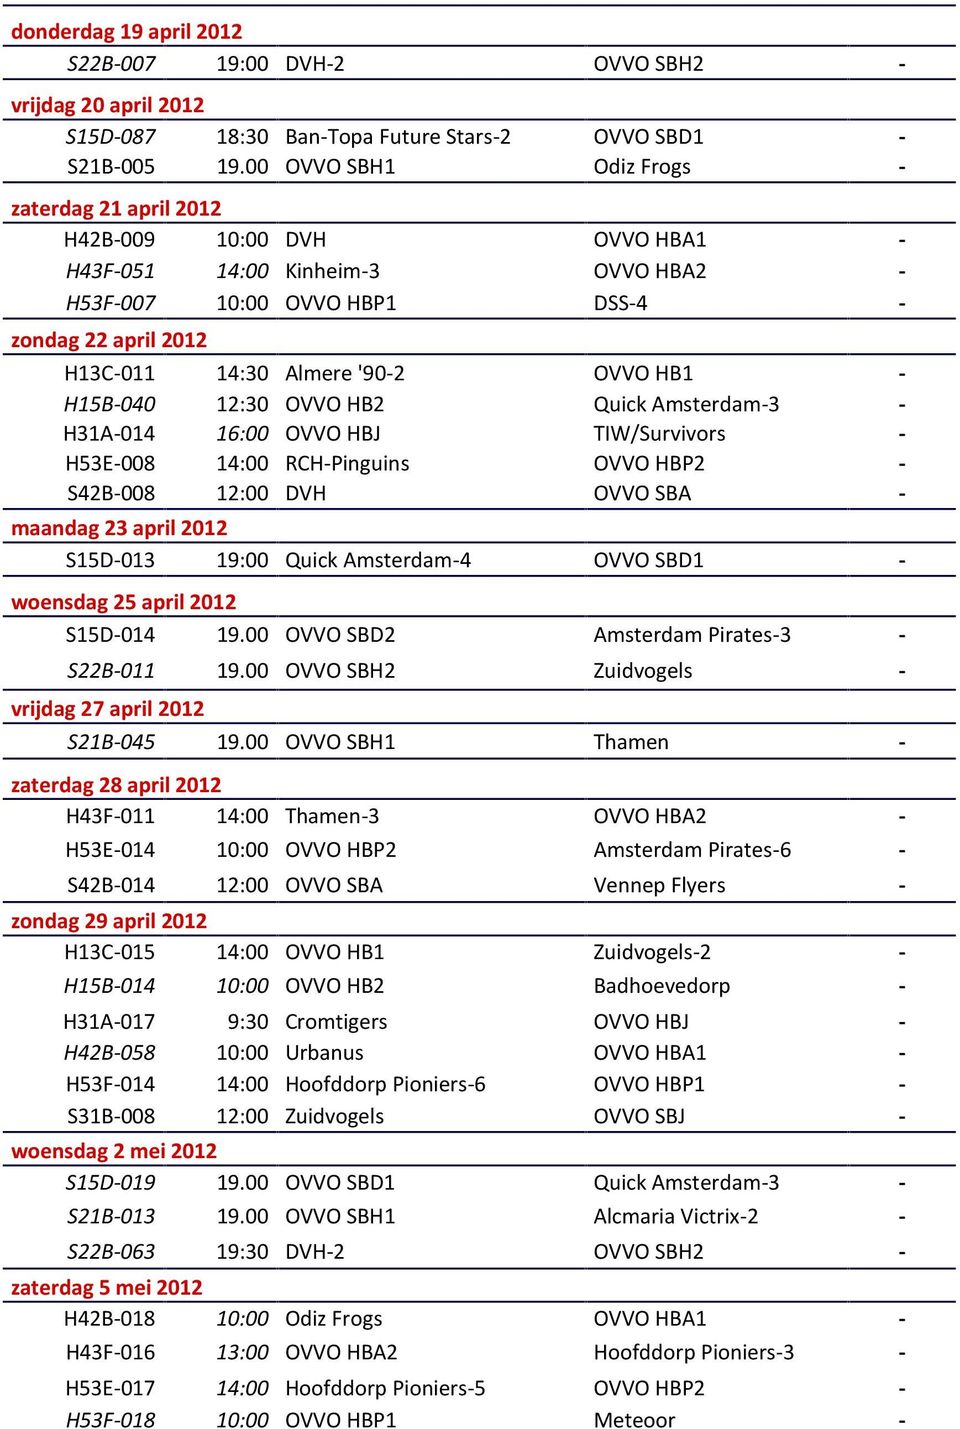 OVVO HB1 - H15B-040 12:30 OVVO HB2 Quick Amsterdam-3 - H31A-014 16:00 OVVO HBJ TIW/Survivors - H53E-008 14:00 RCH-Pinguins OVVO HBP2 - S42B-008 12:00 DVH OVVO SBA - maandag 23 april 2012 S15D-013